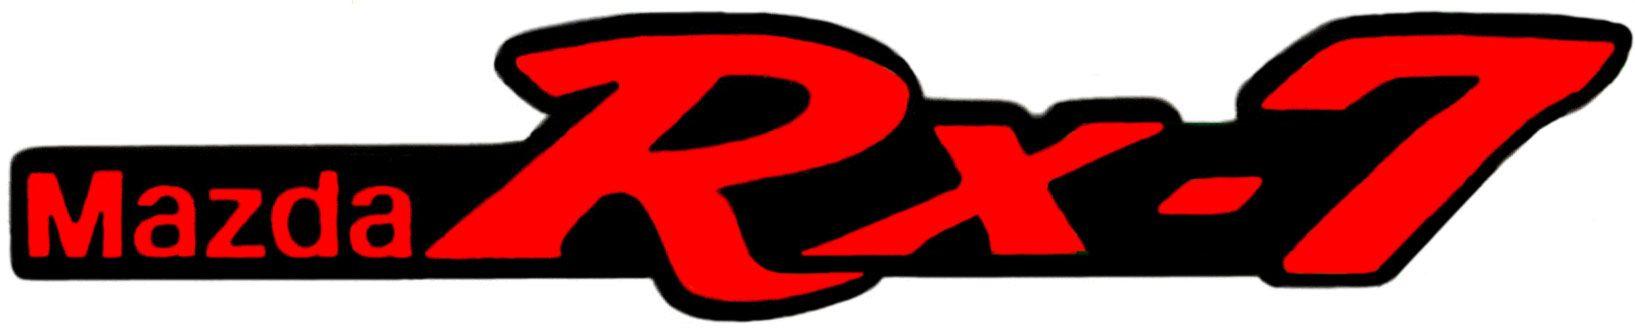 Rx-7 Logo - Index of /images/rx7